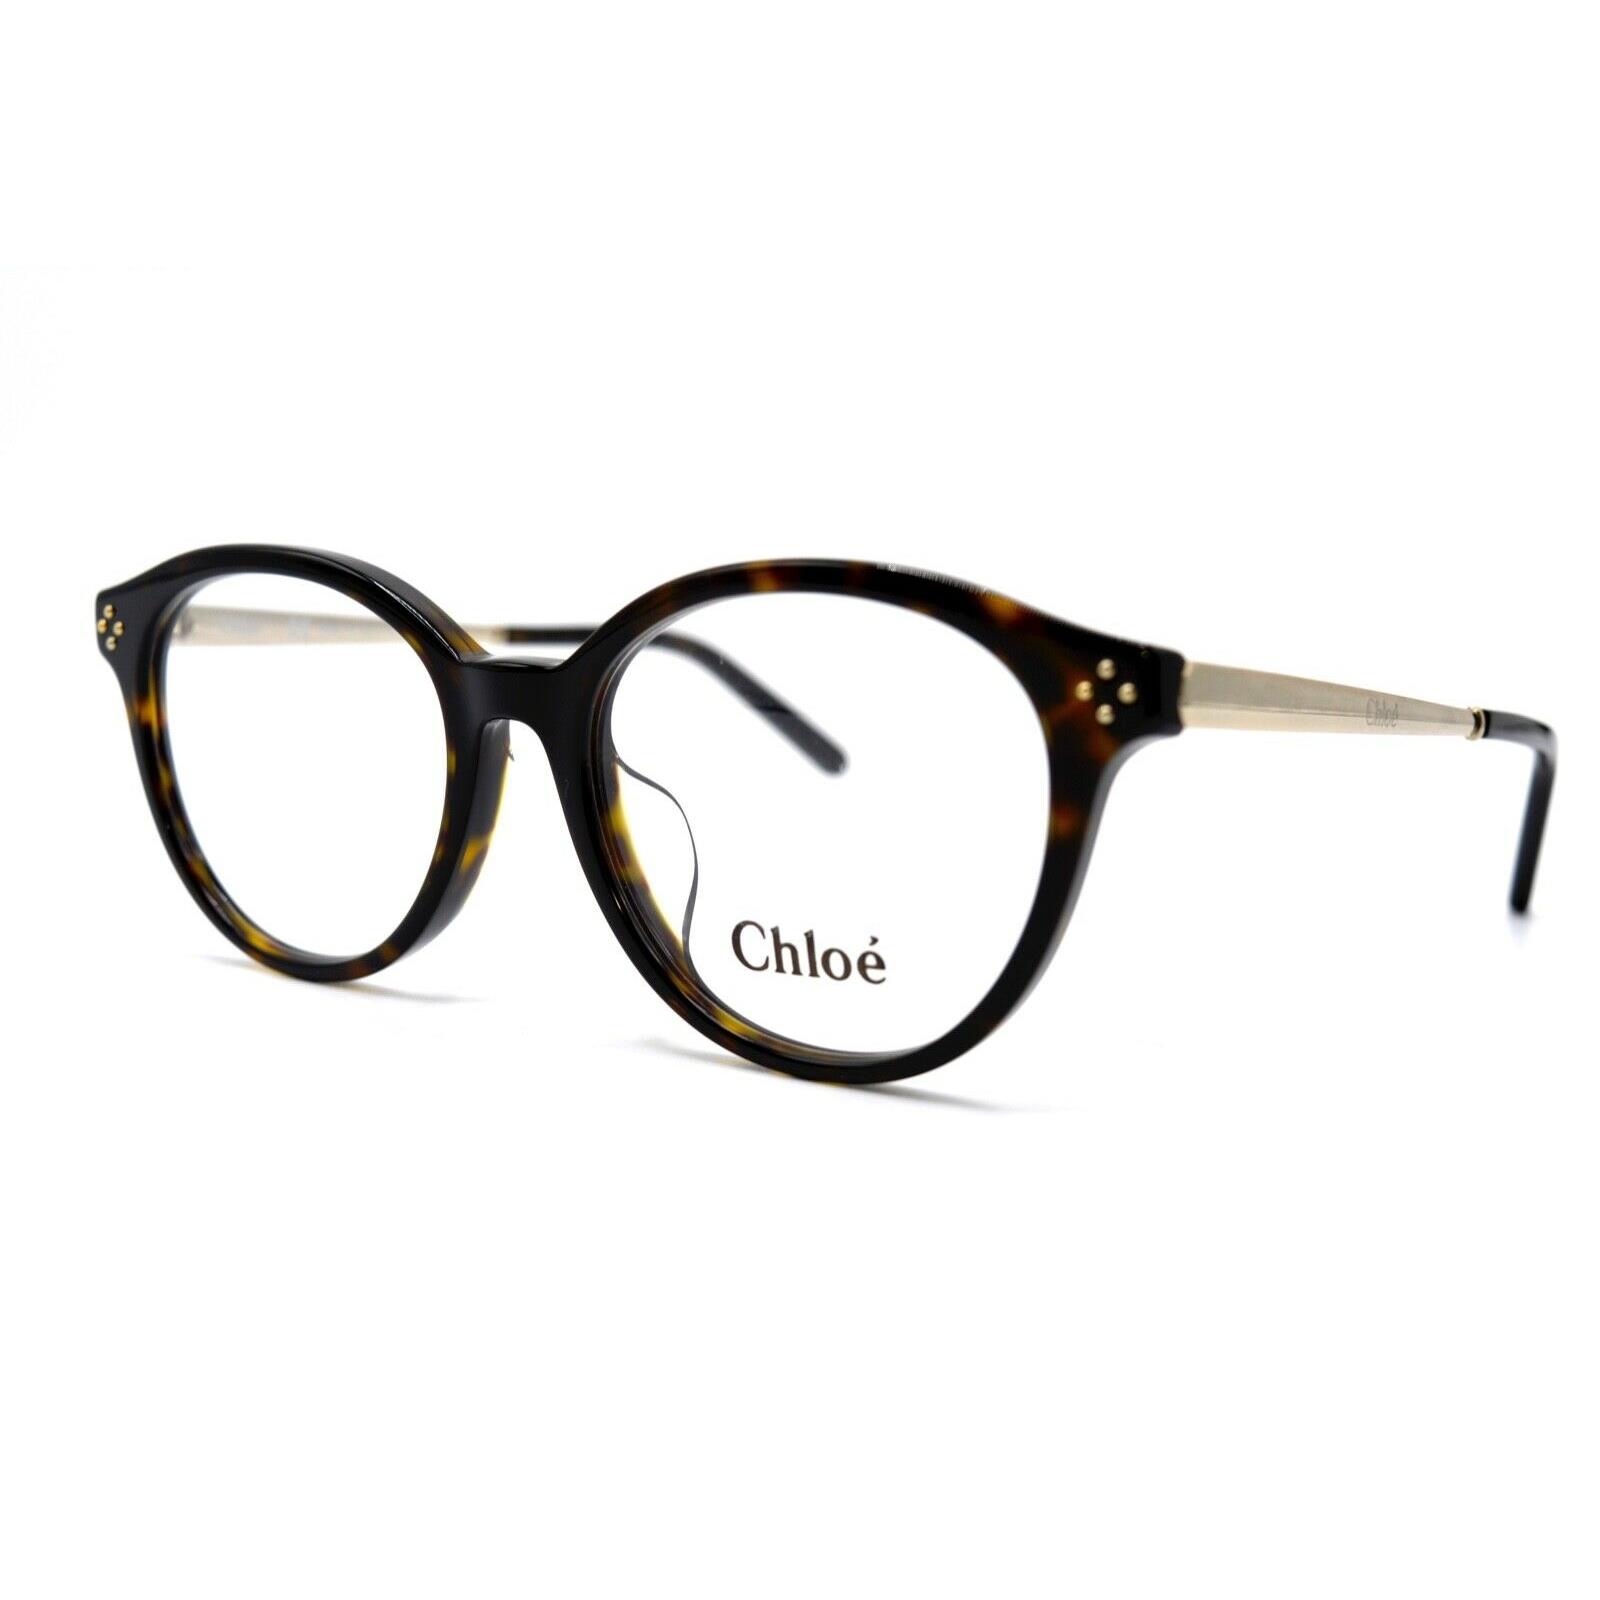 Chloé Brand - Shop Chloé fashion accessories | Fash Brands - Page 12